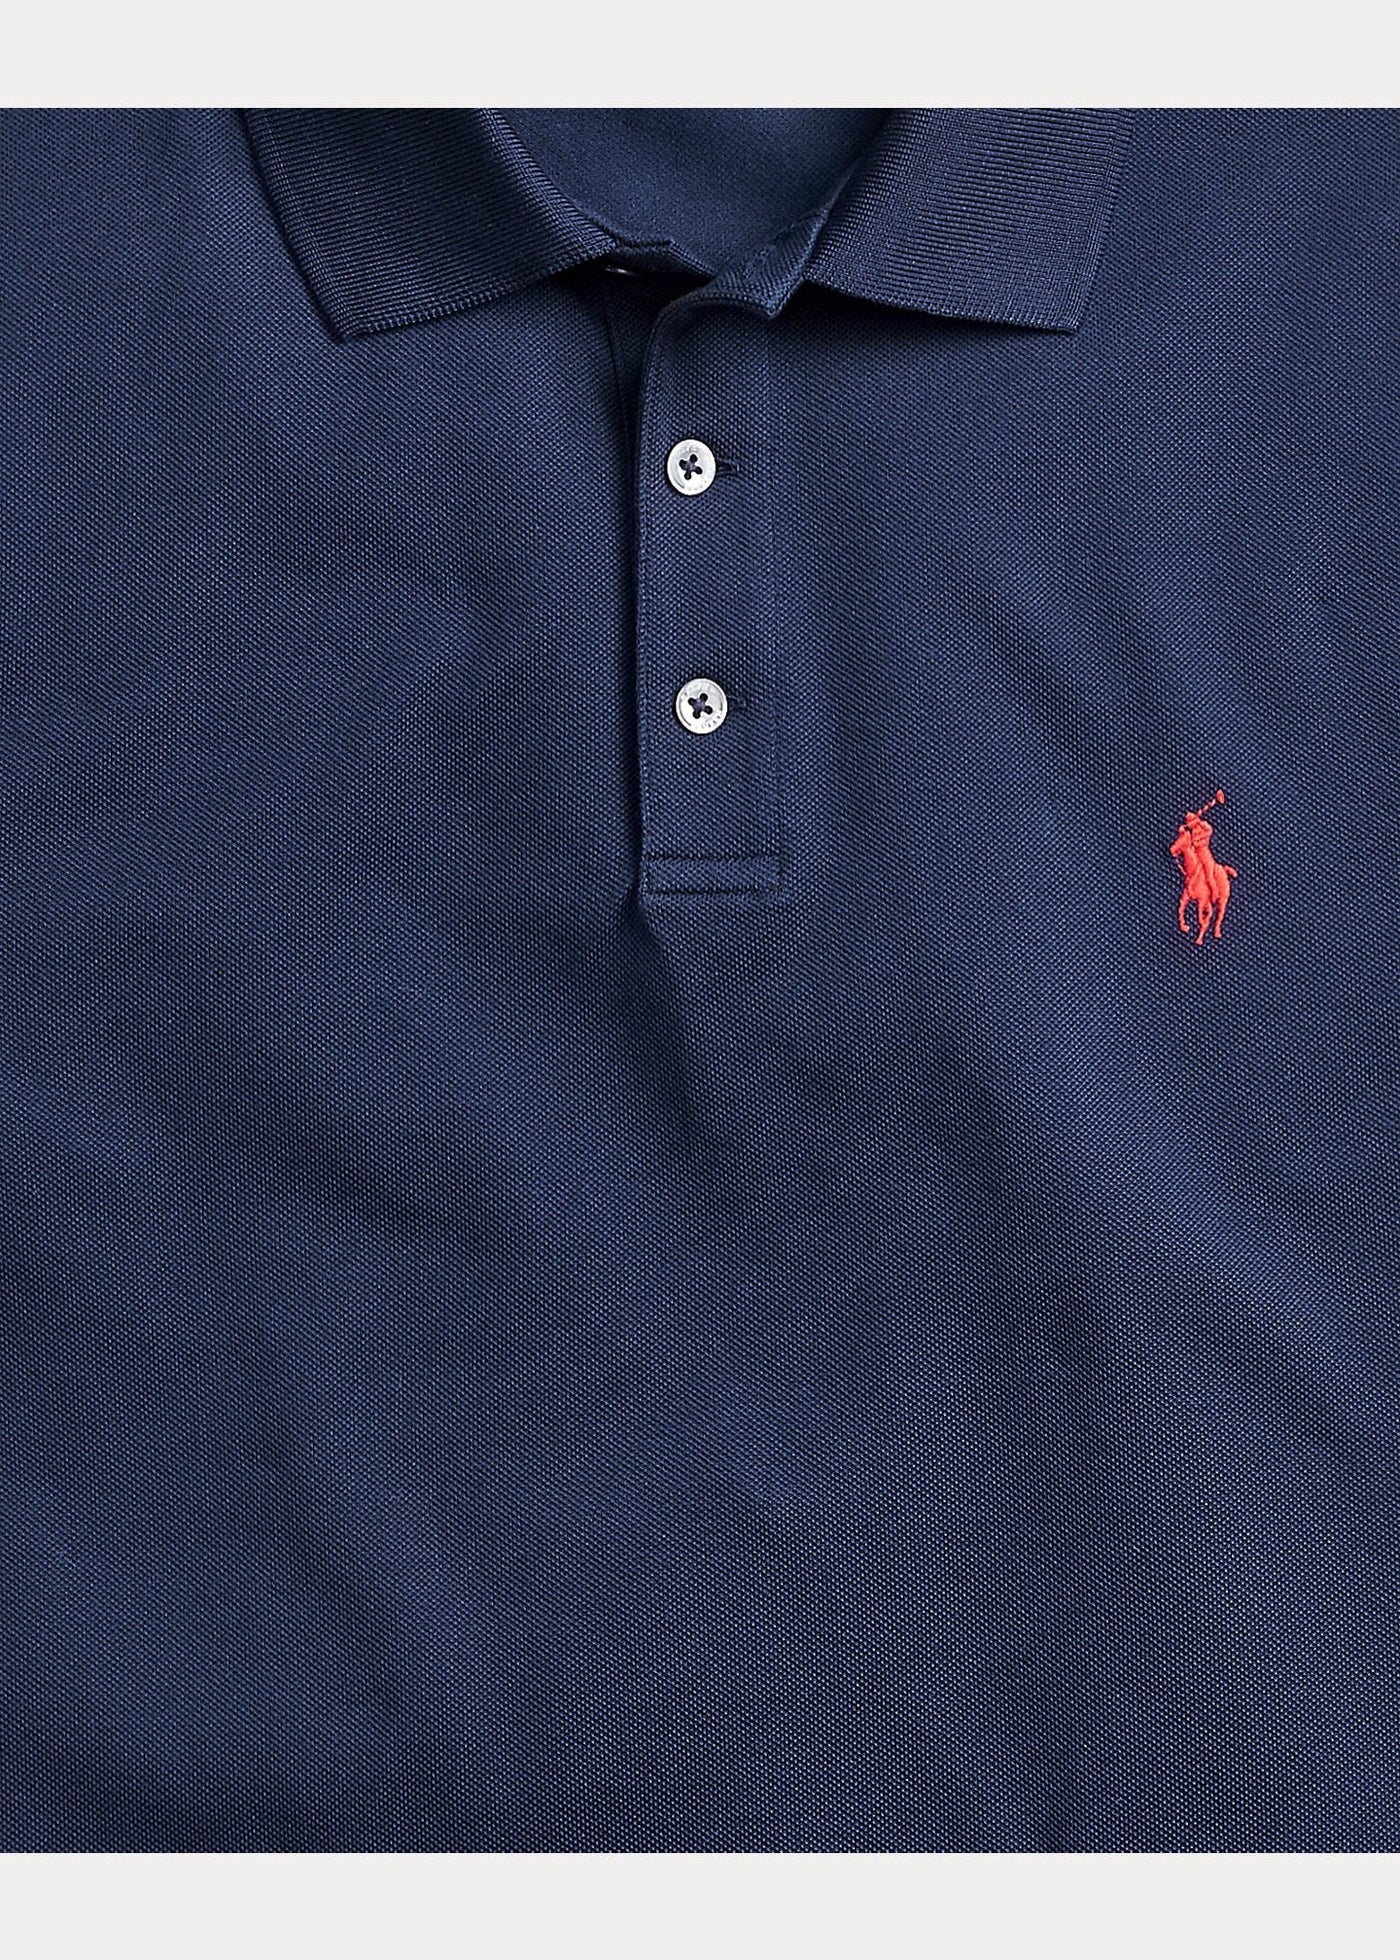 Polo Ralph Lauren - Polo cintré en coton piqué stretch Refined navy - Lothaire